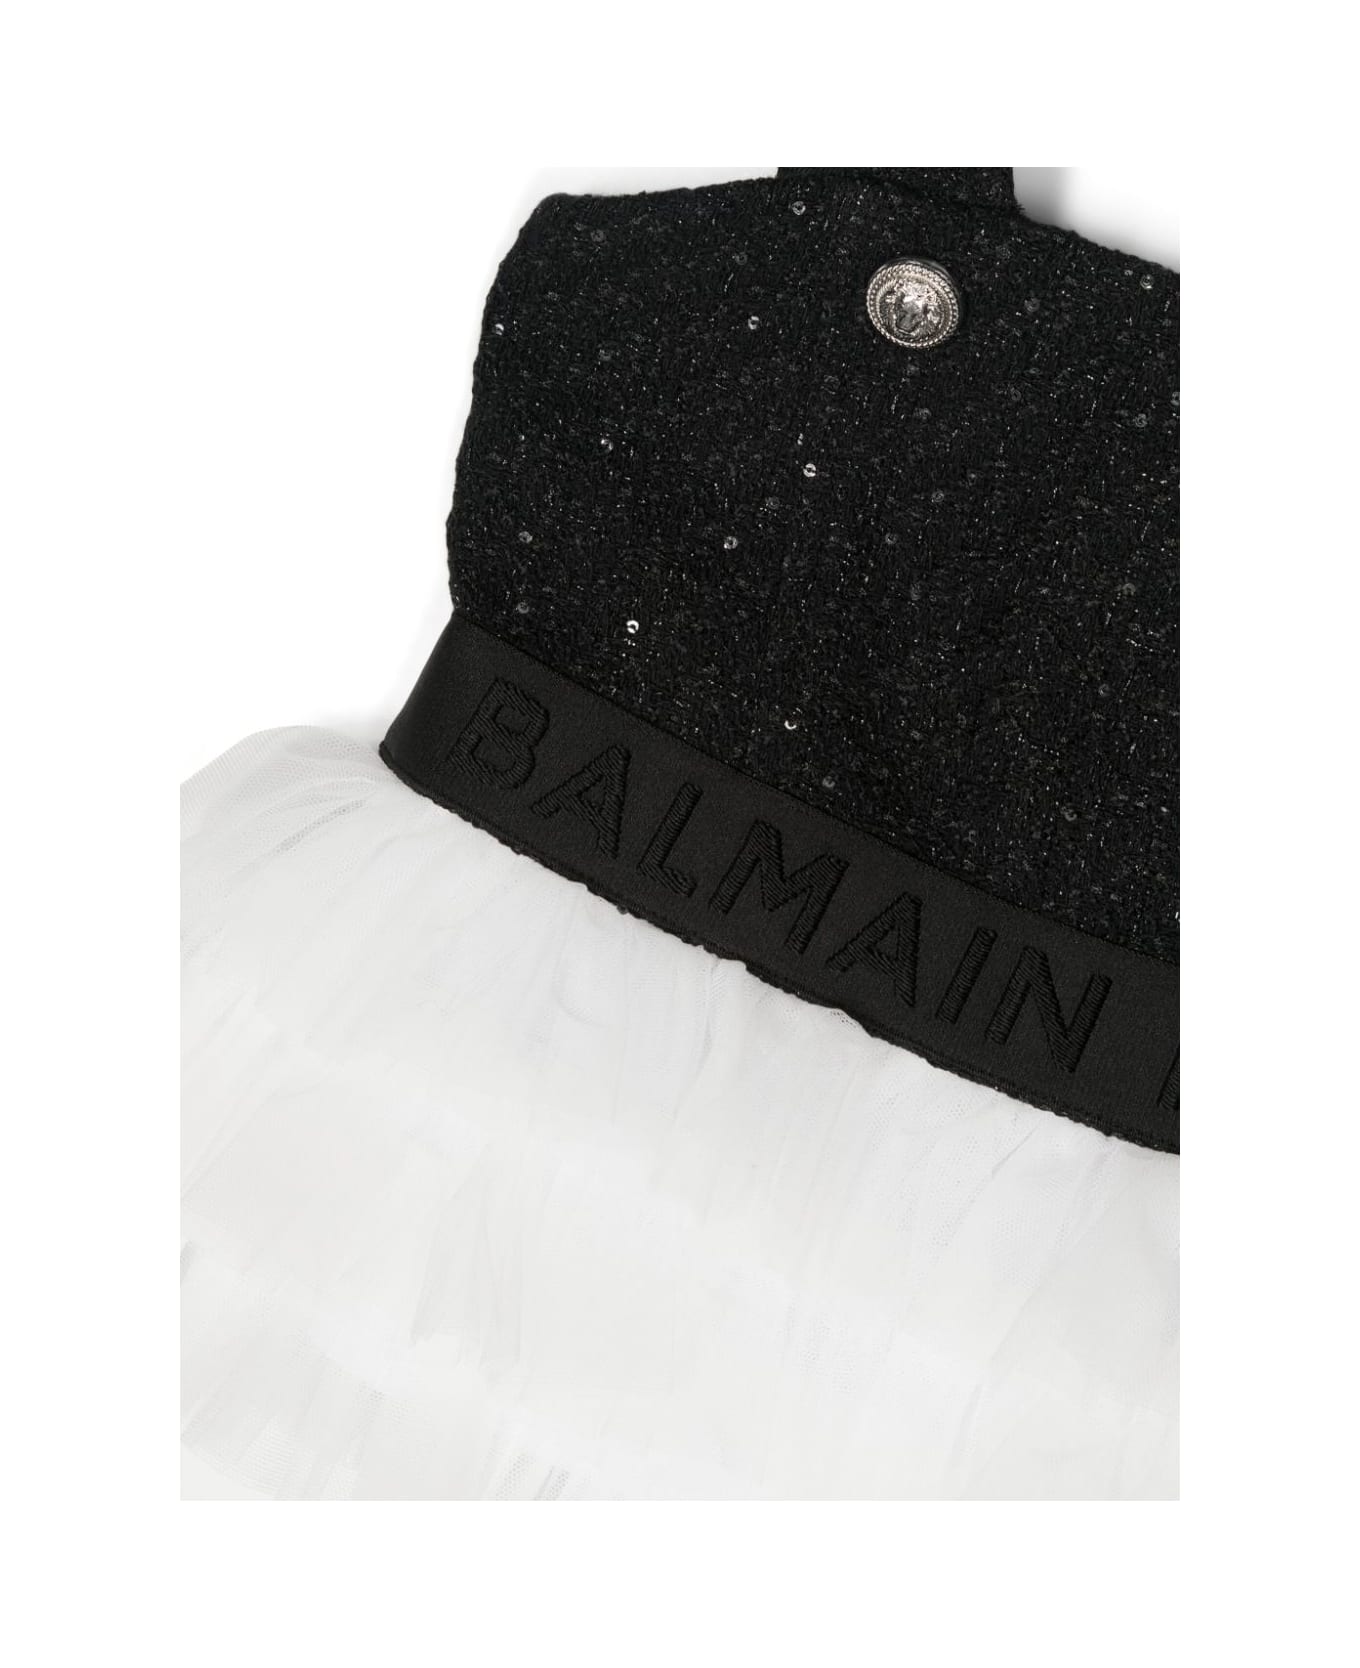 Balmain Top With Insert Design - Black